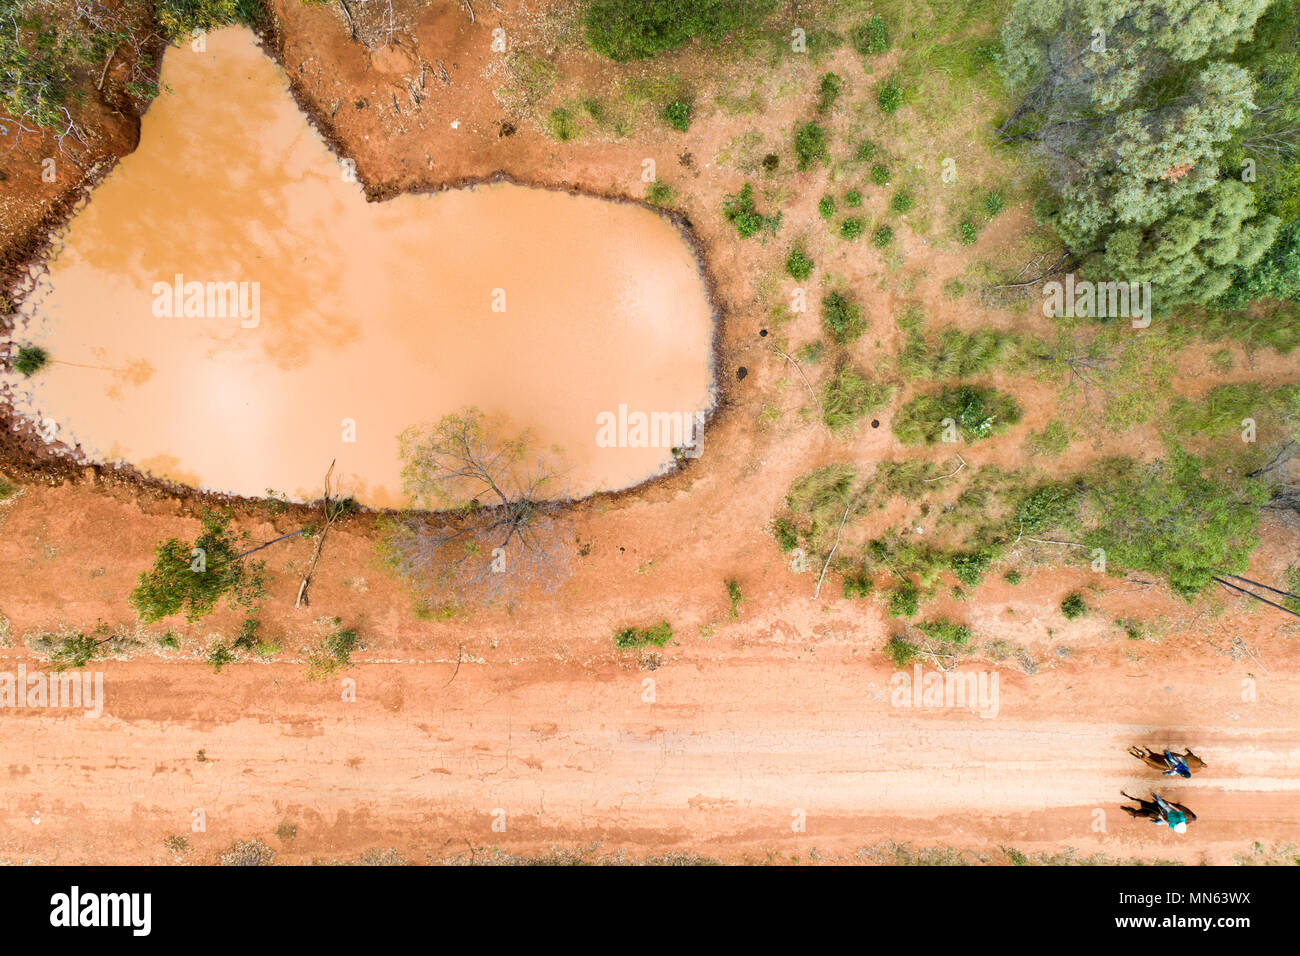 Foto aerea di una diga di sporco su una fattoria in Queensland. Foto Stock